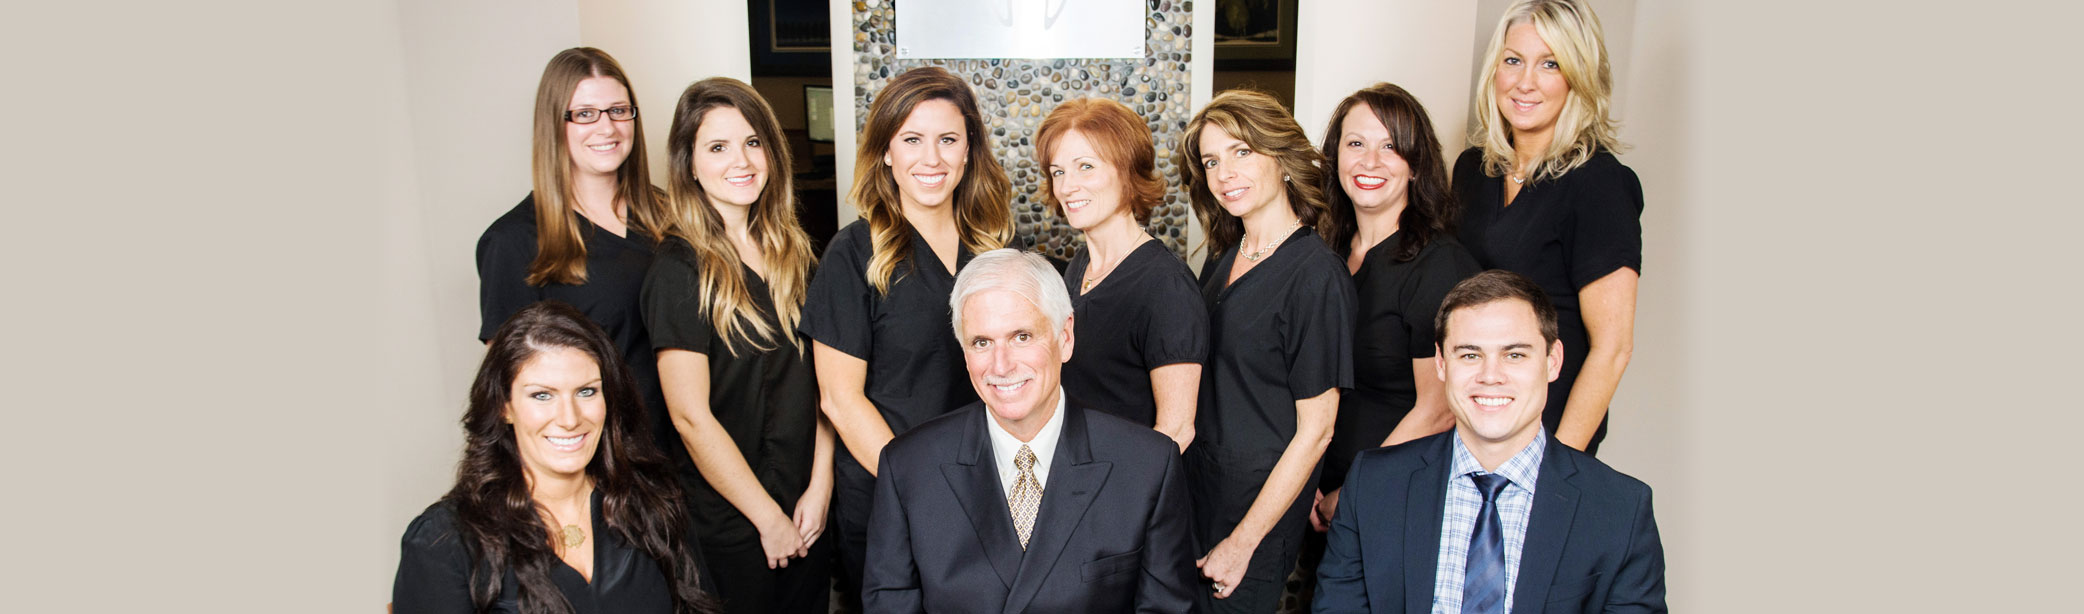 McDowell Dental Group Team